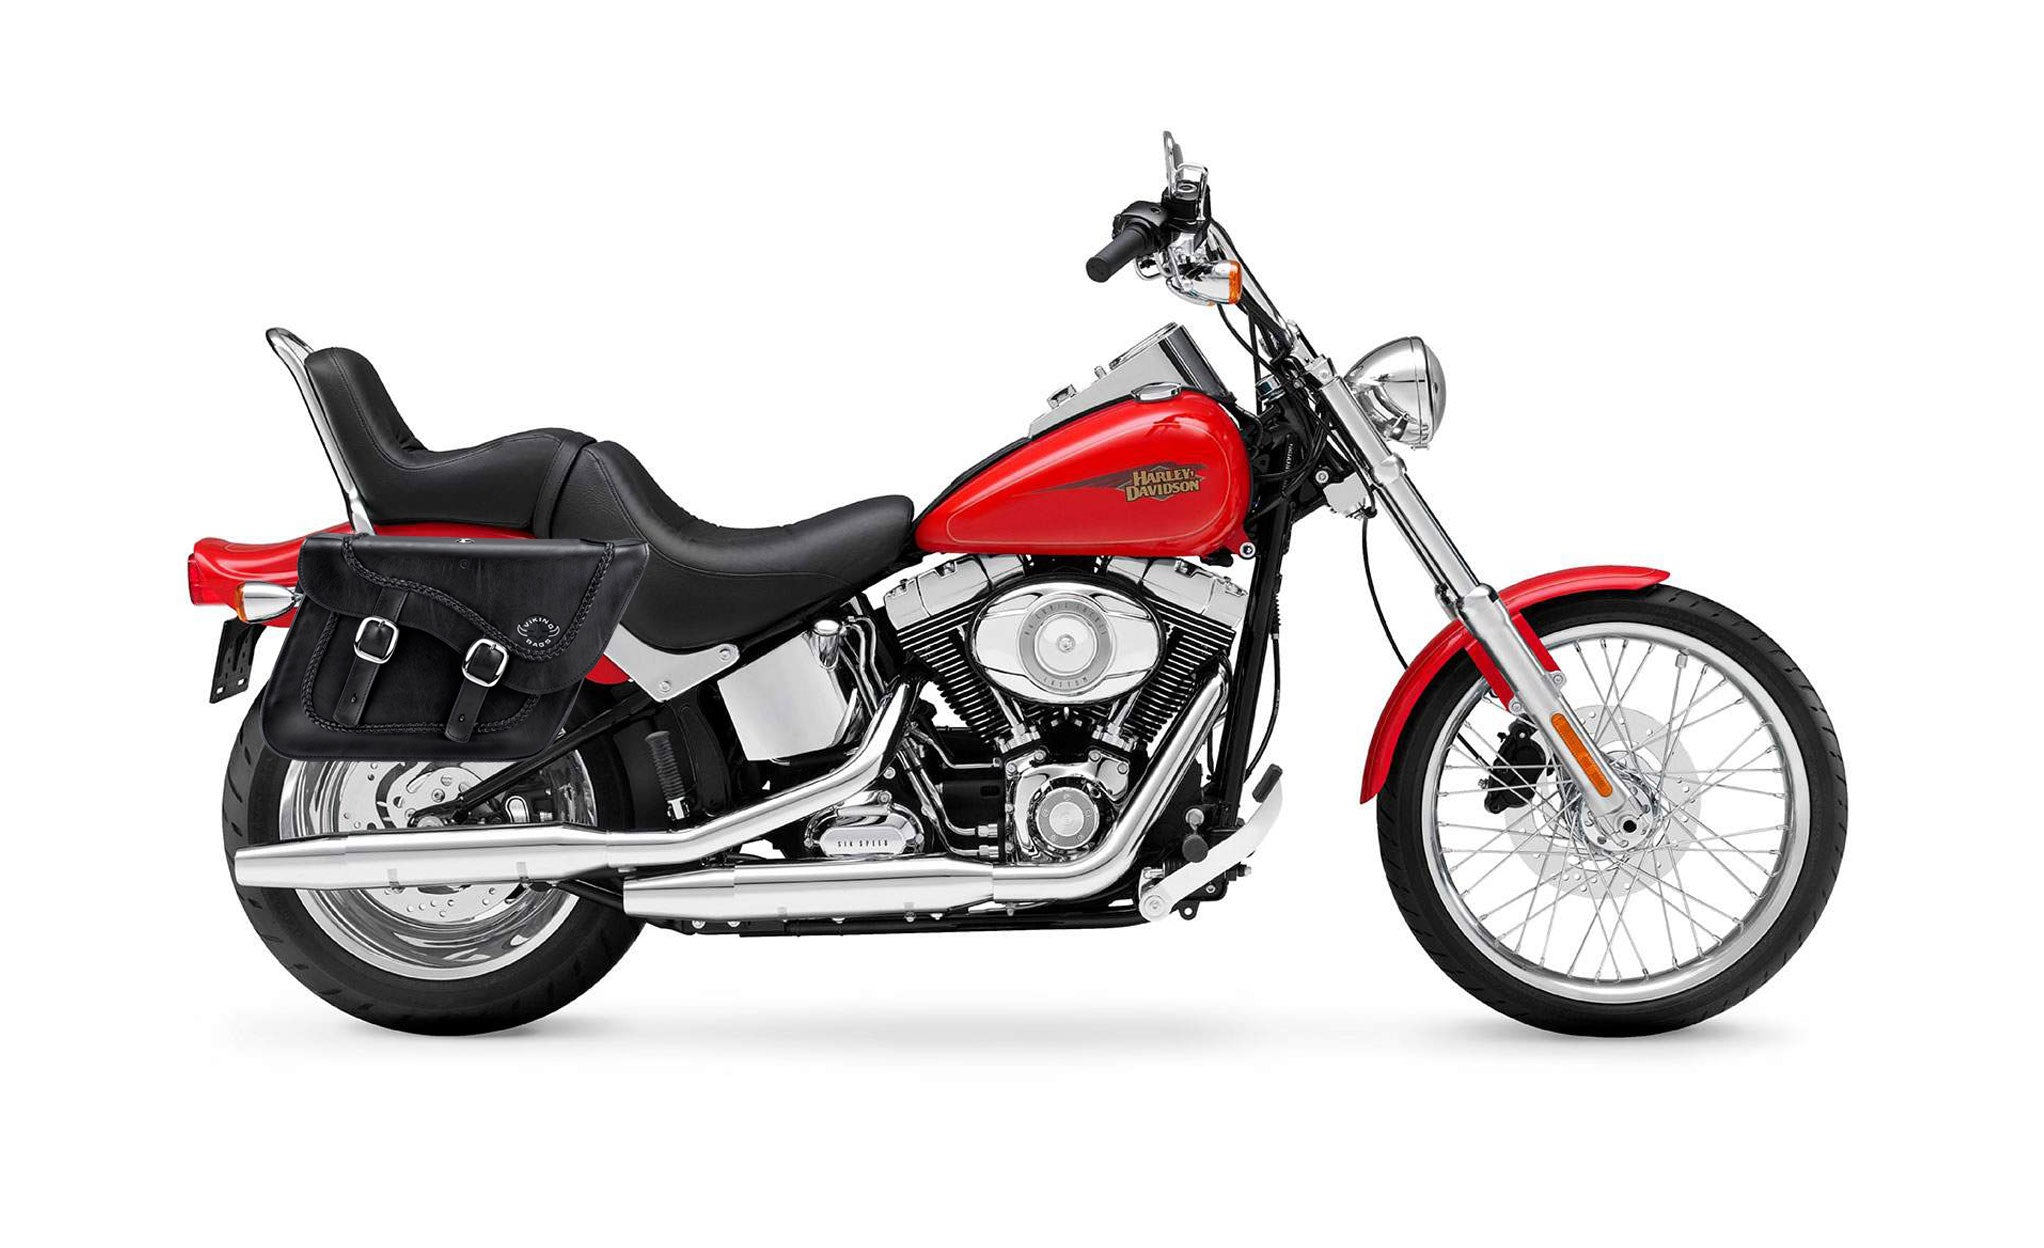 Viking Americano Braided Large Leather Motorcycle Saddlebags For Harley Softail Custom Fxstc on Bike Photo @expand